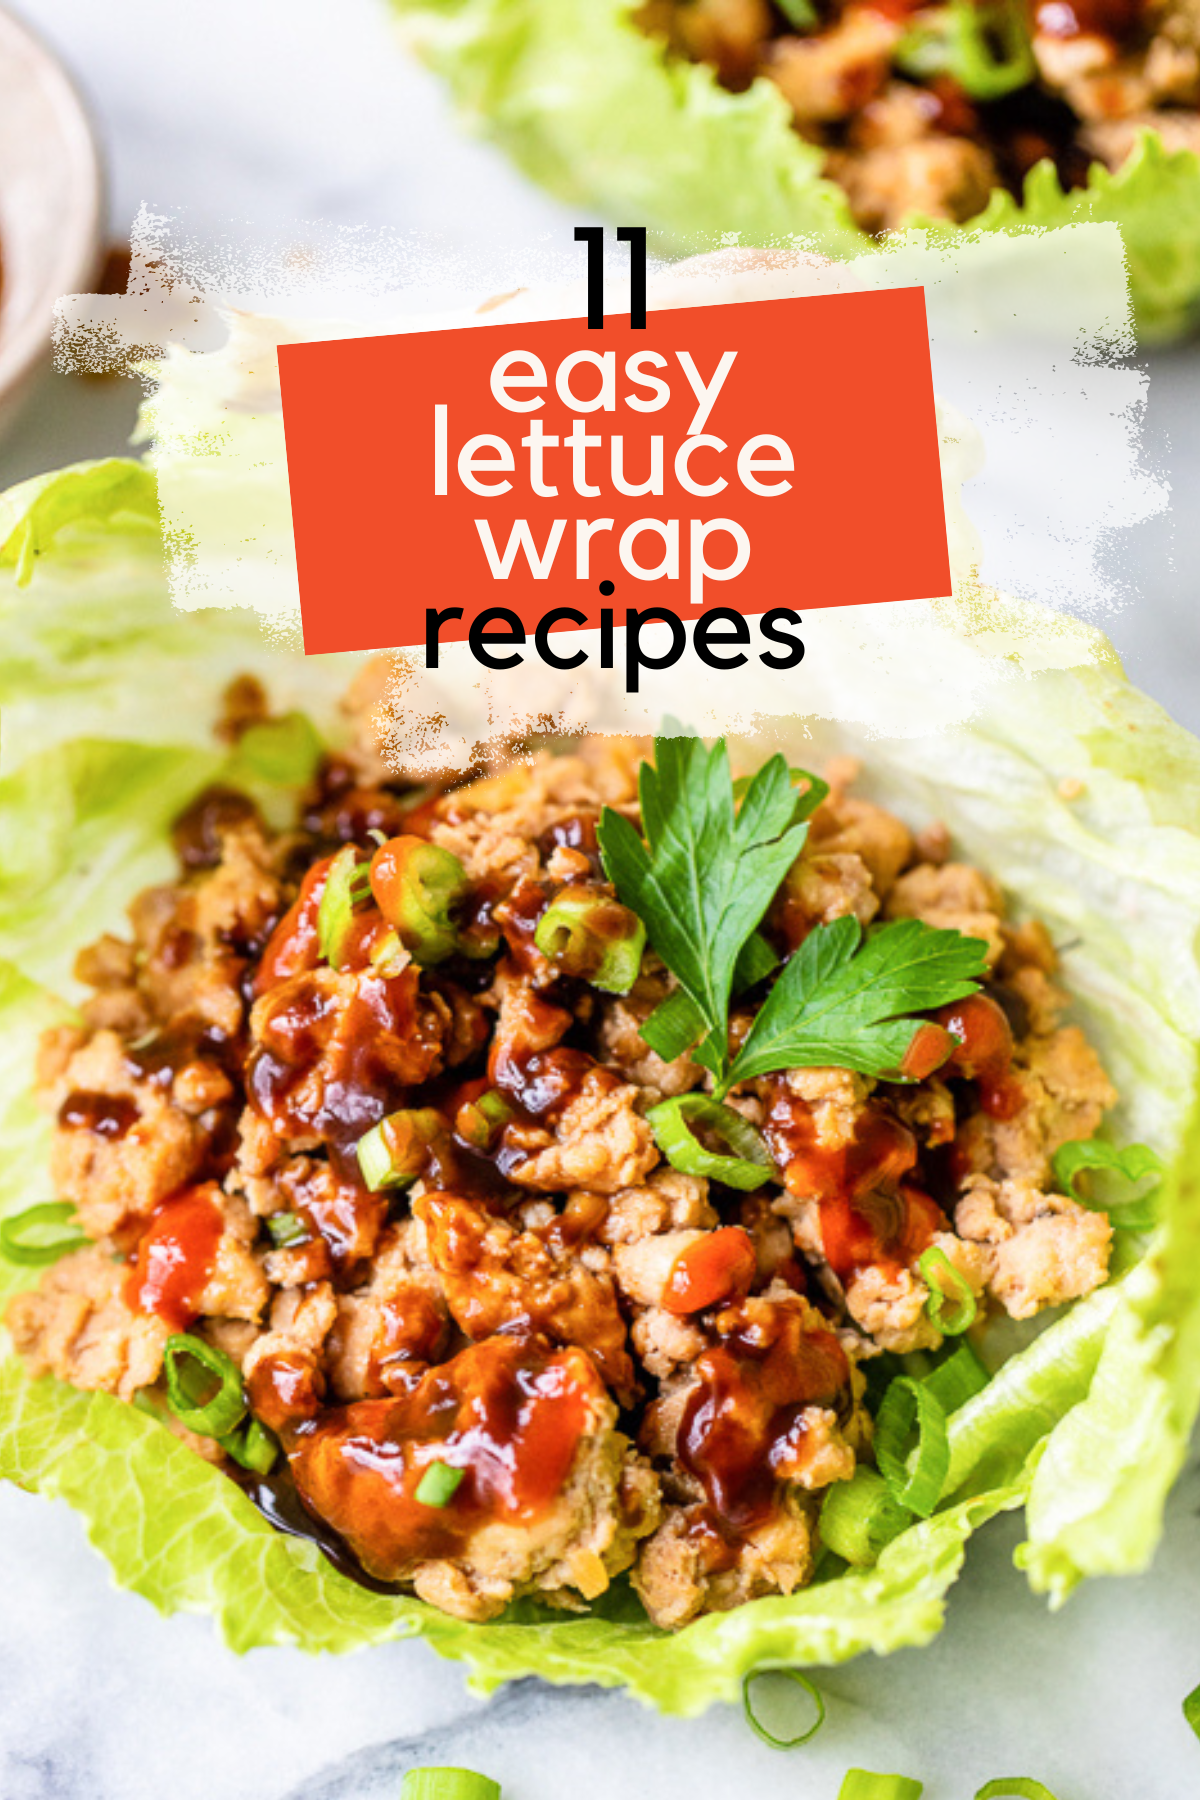 Lettuce wrap recipe summary